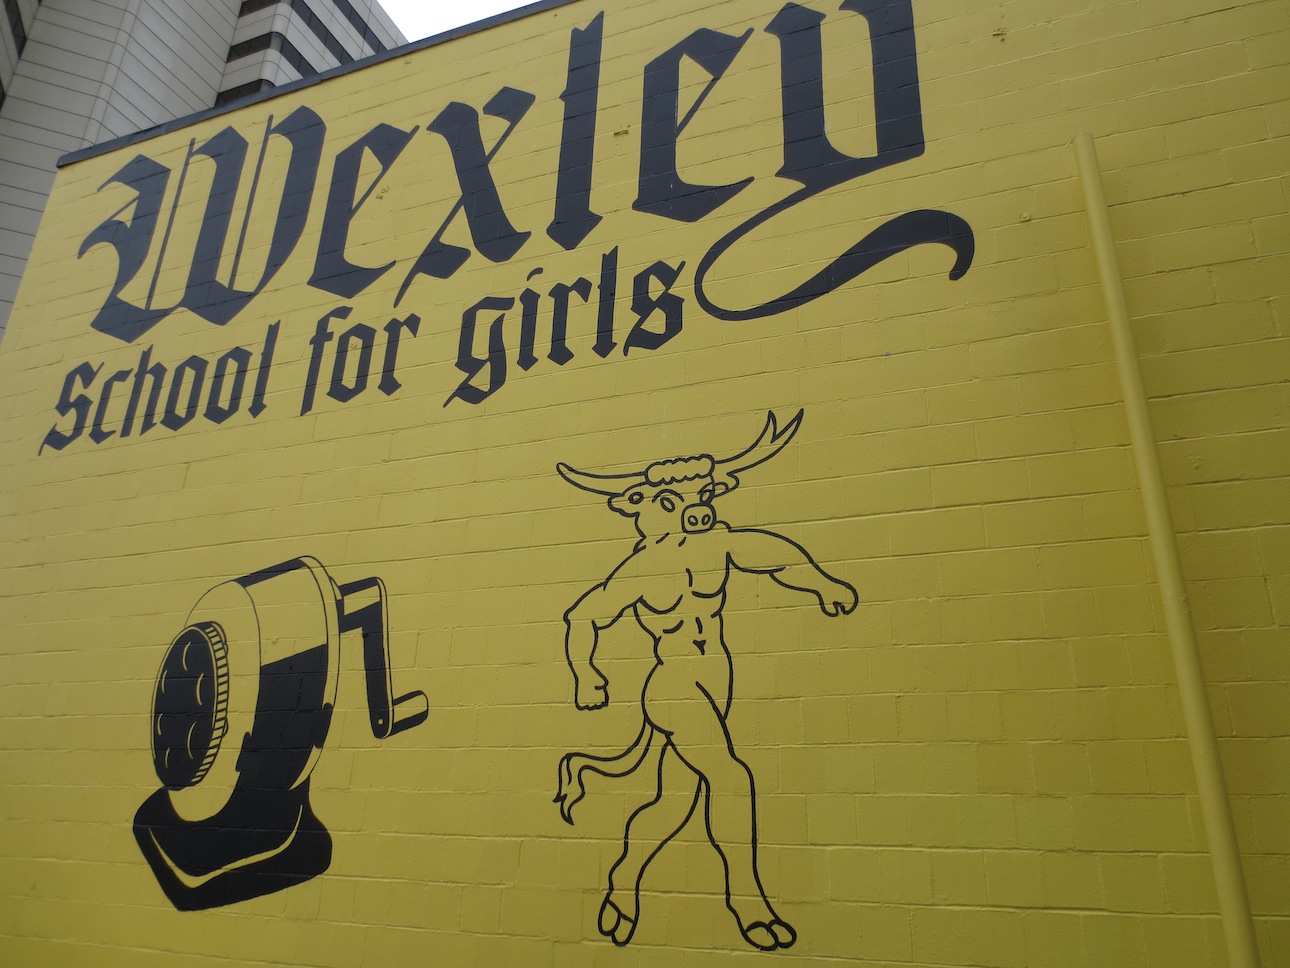 Wexley School for Girls artwork.